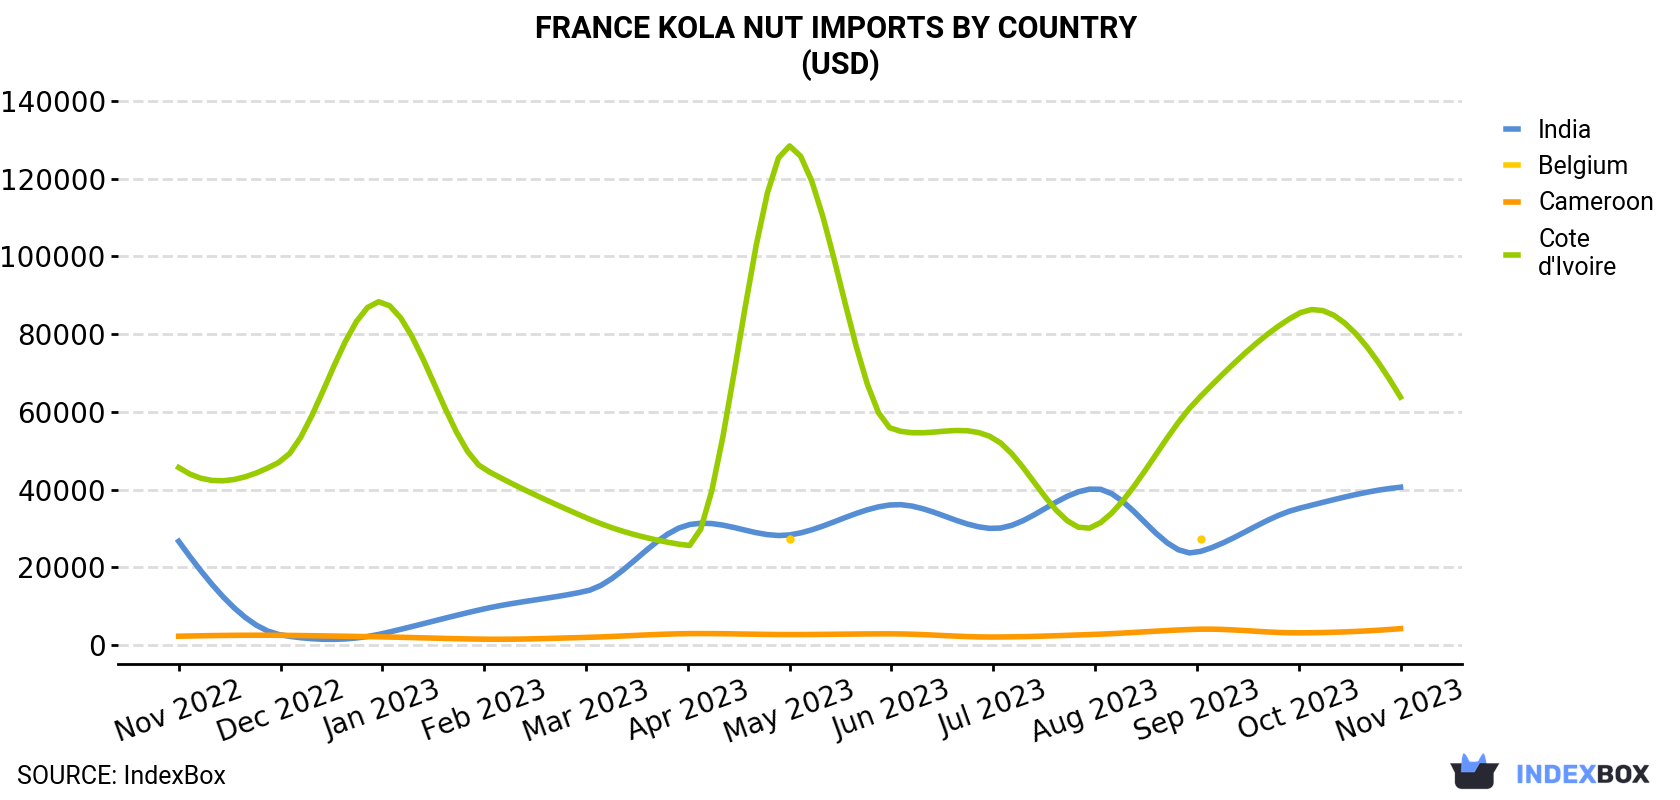 France Kola Nut Imports By Country (USD)